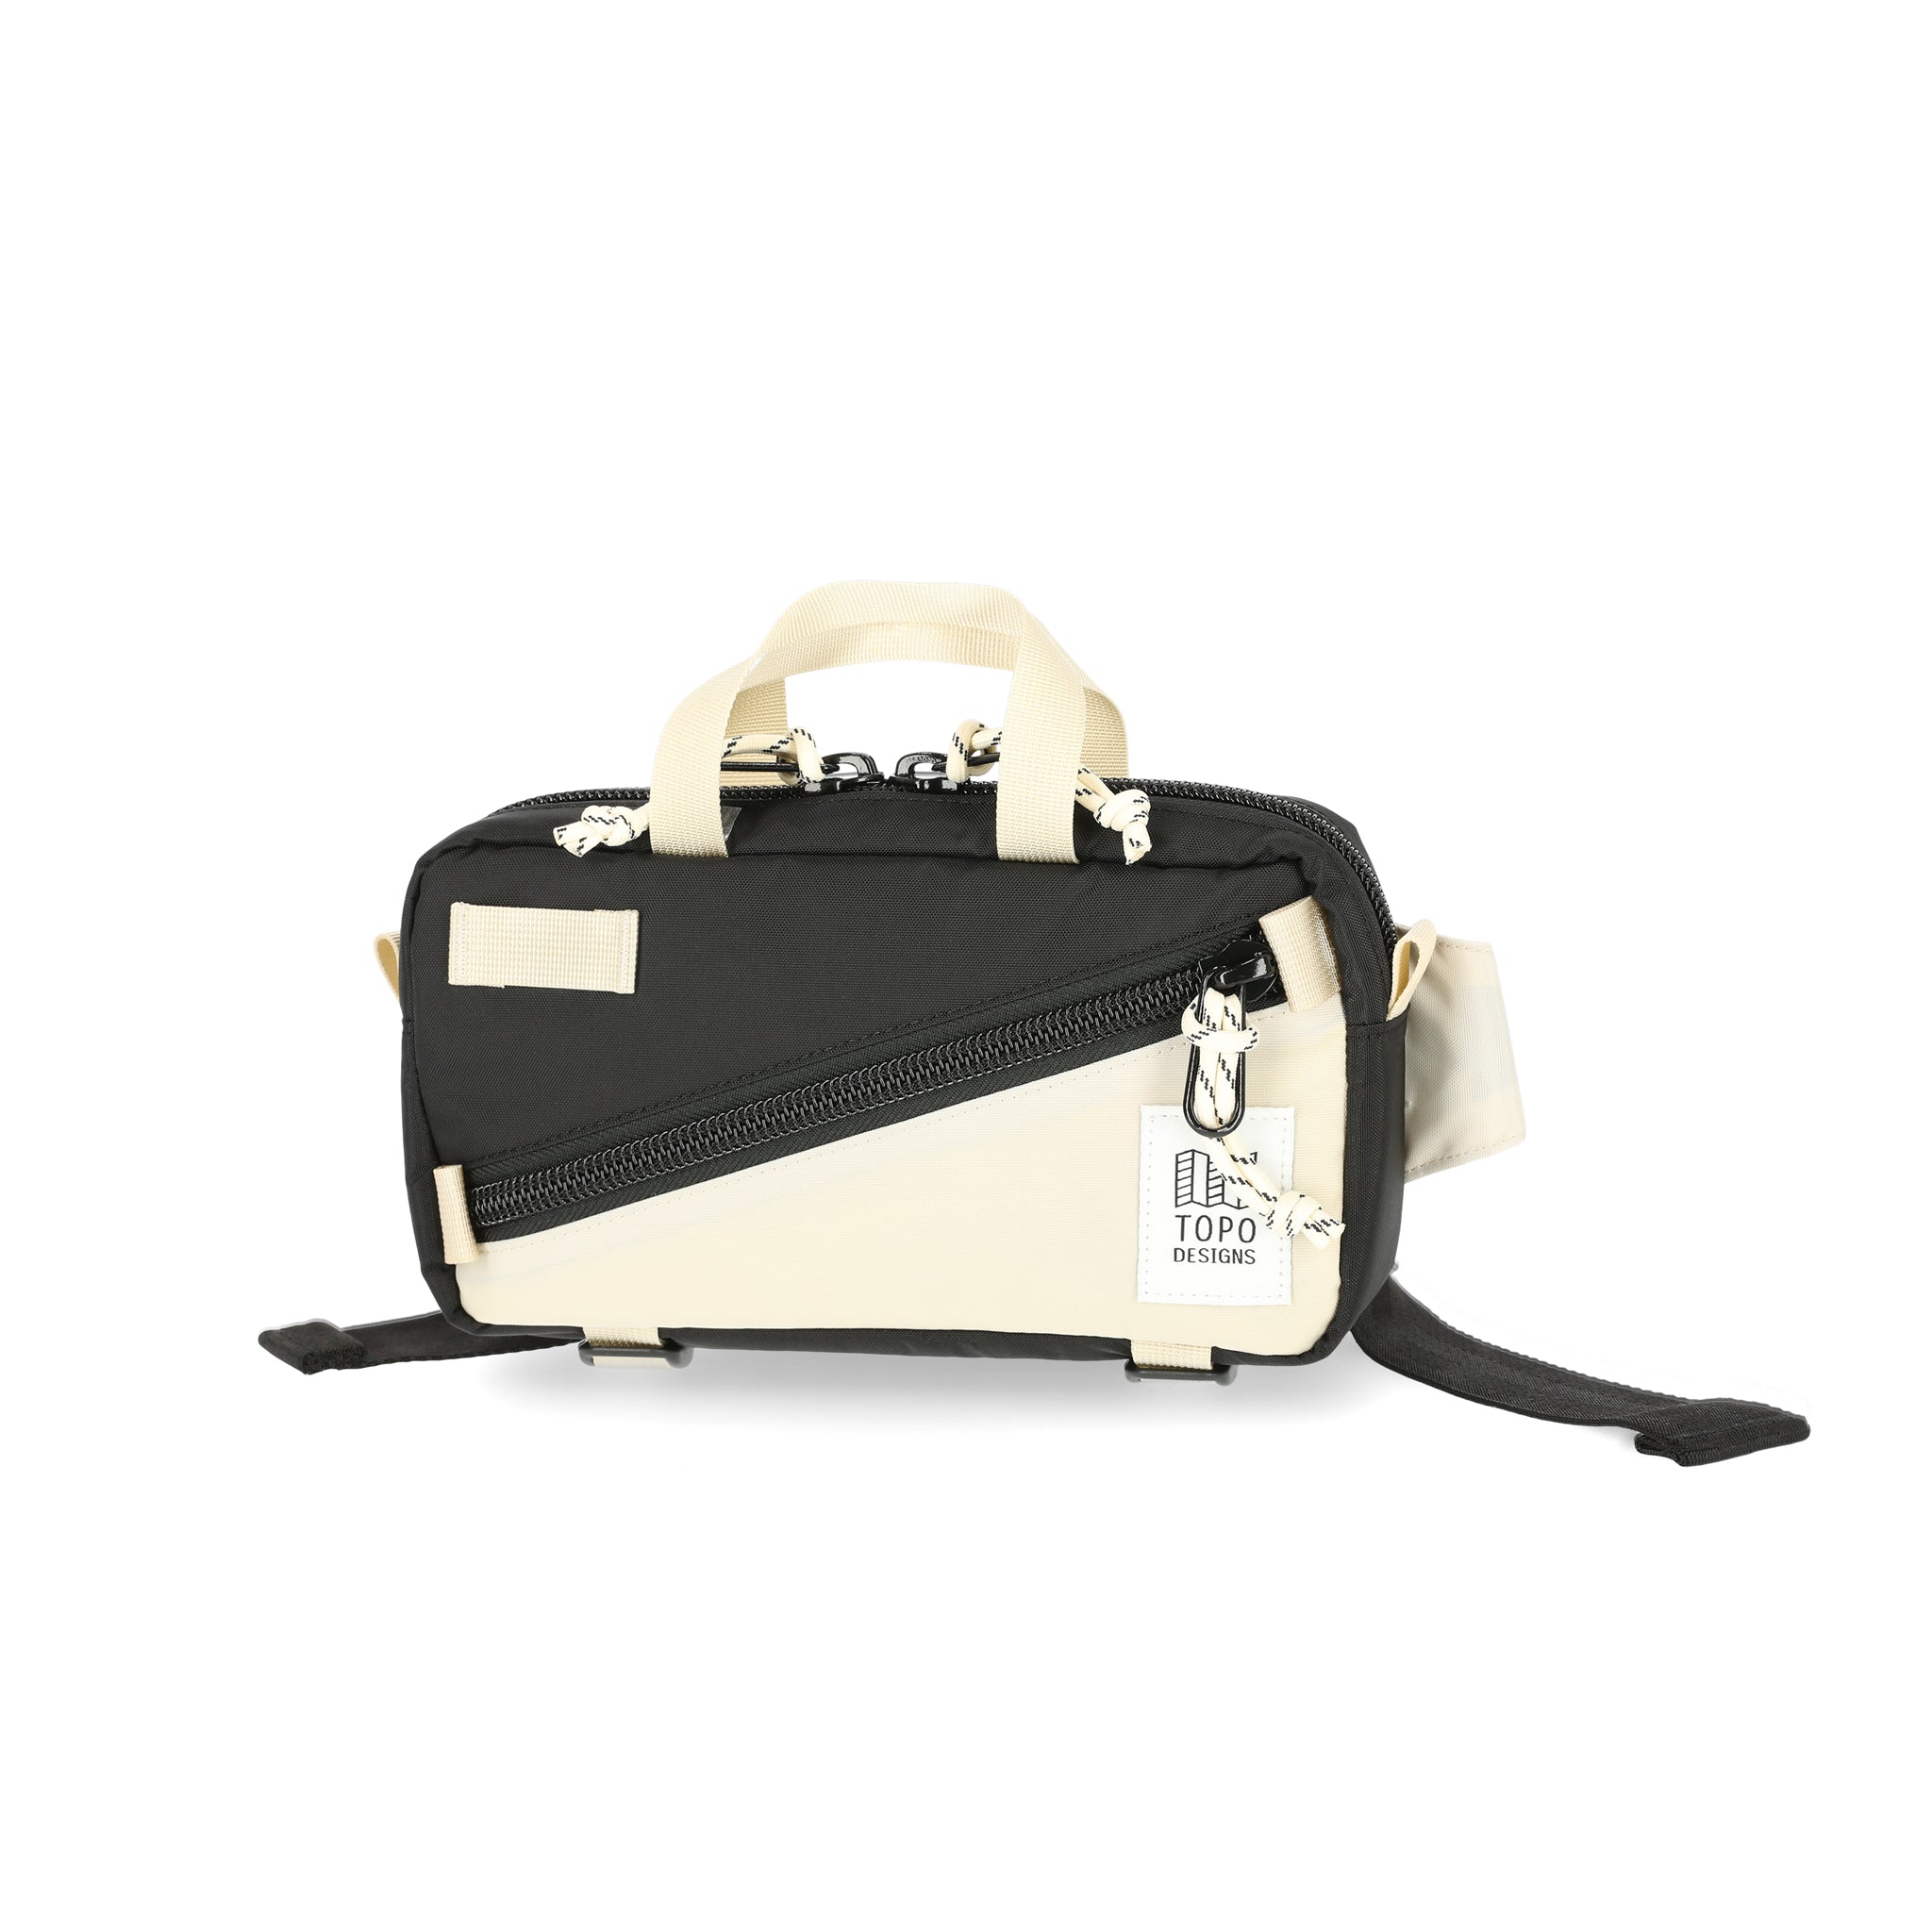 Topo Designs Mini Quick Pack crossbody hip fanny bum bag in "Black / Bone White" recycled nylon.